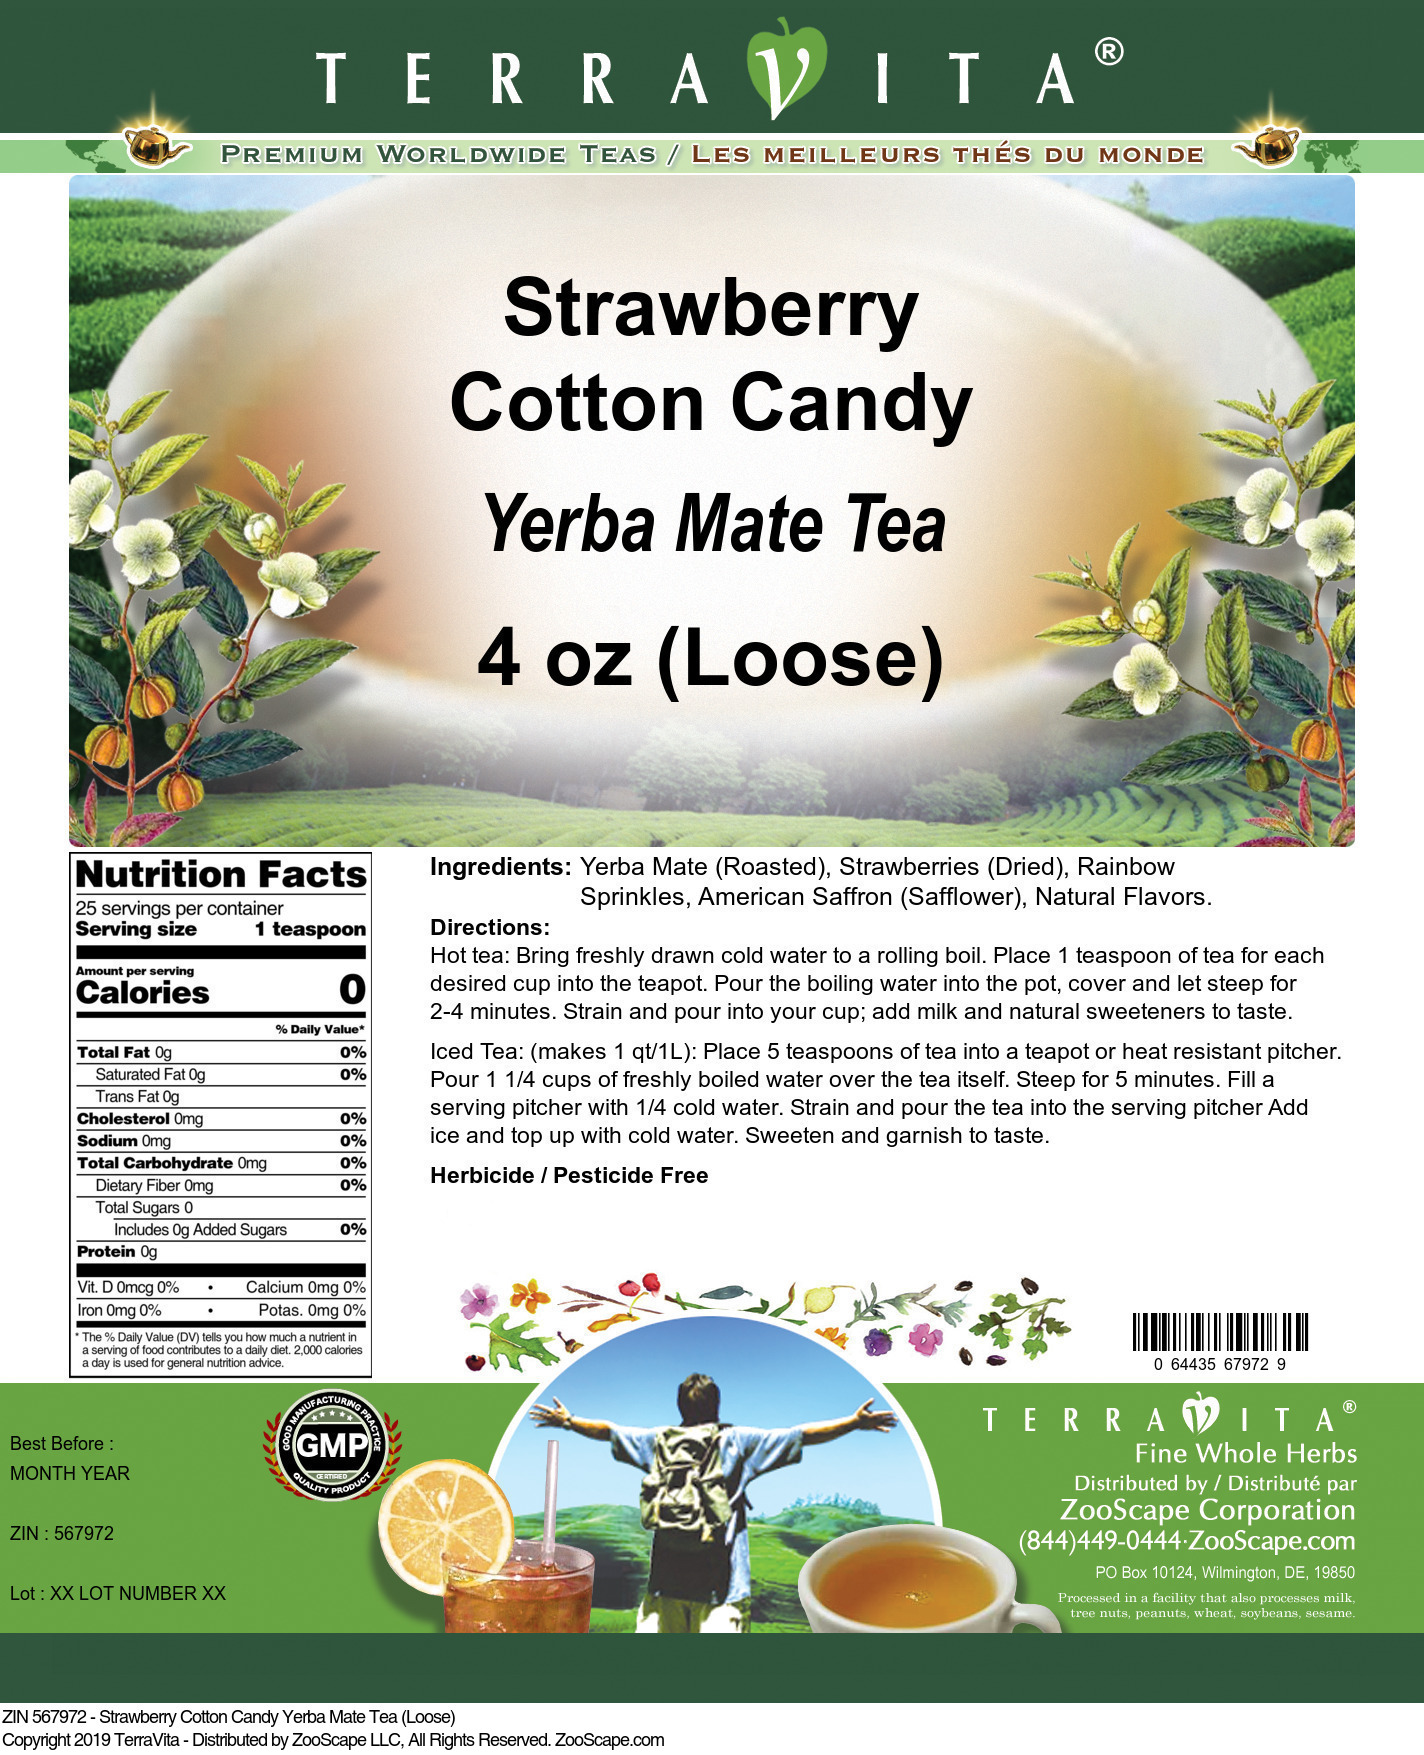 Strawberry Cotton Candy Yerba Mate Tea (Loose) - Label